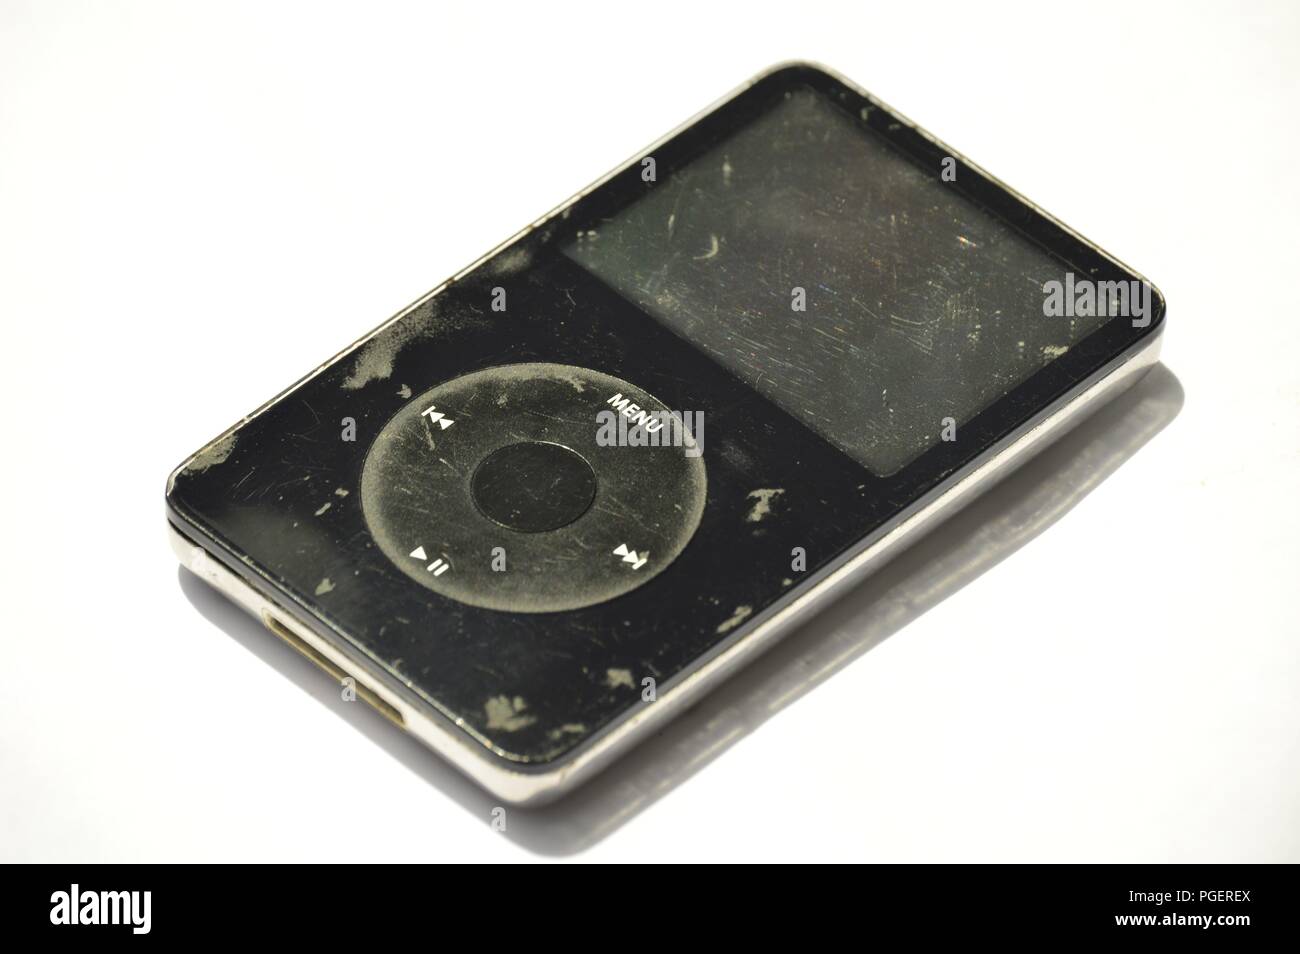 Ipod classic first generation Stock Photo